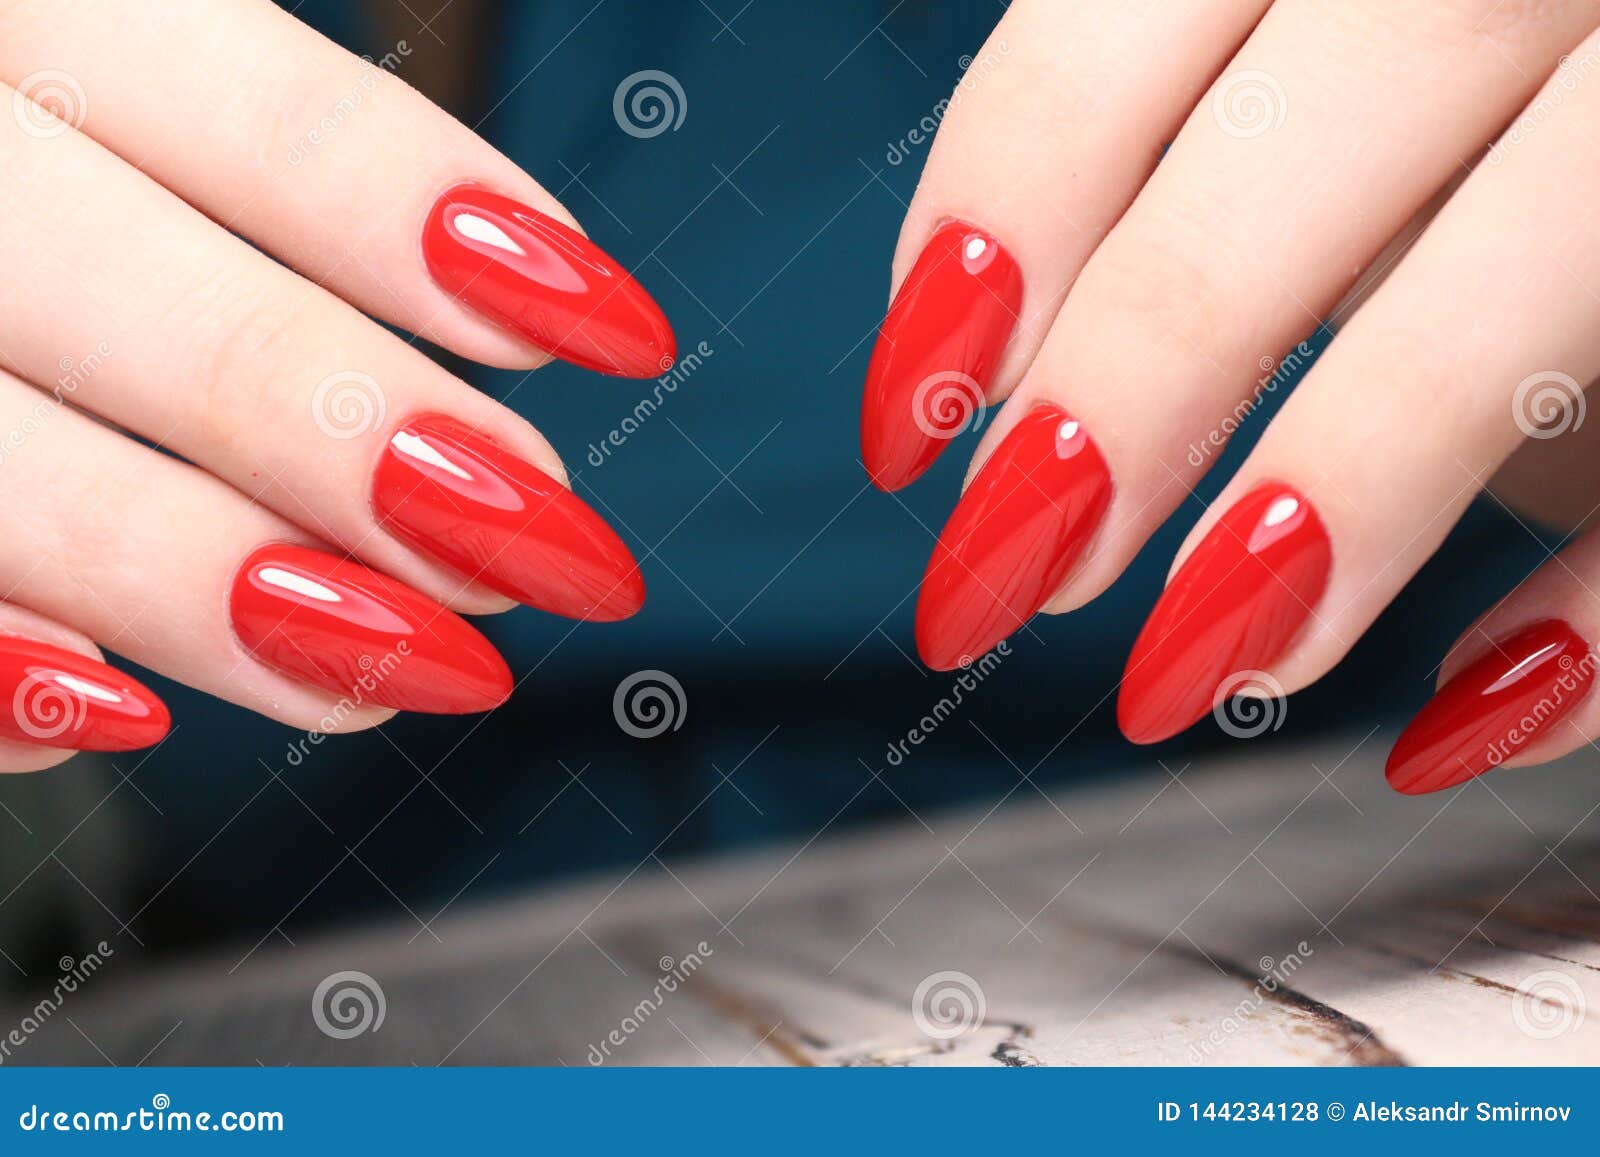 The Beauty of the Natural Nails Stock Photo - Image of hand, nail: 144234128